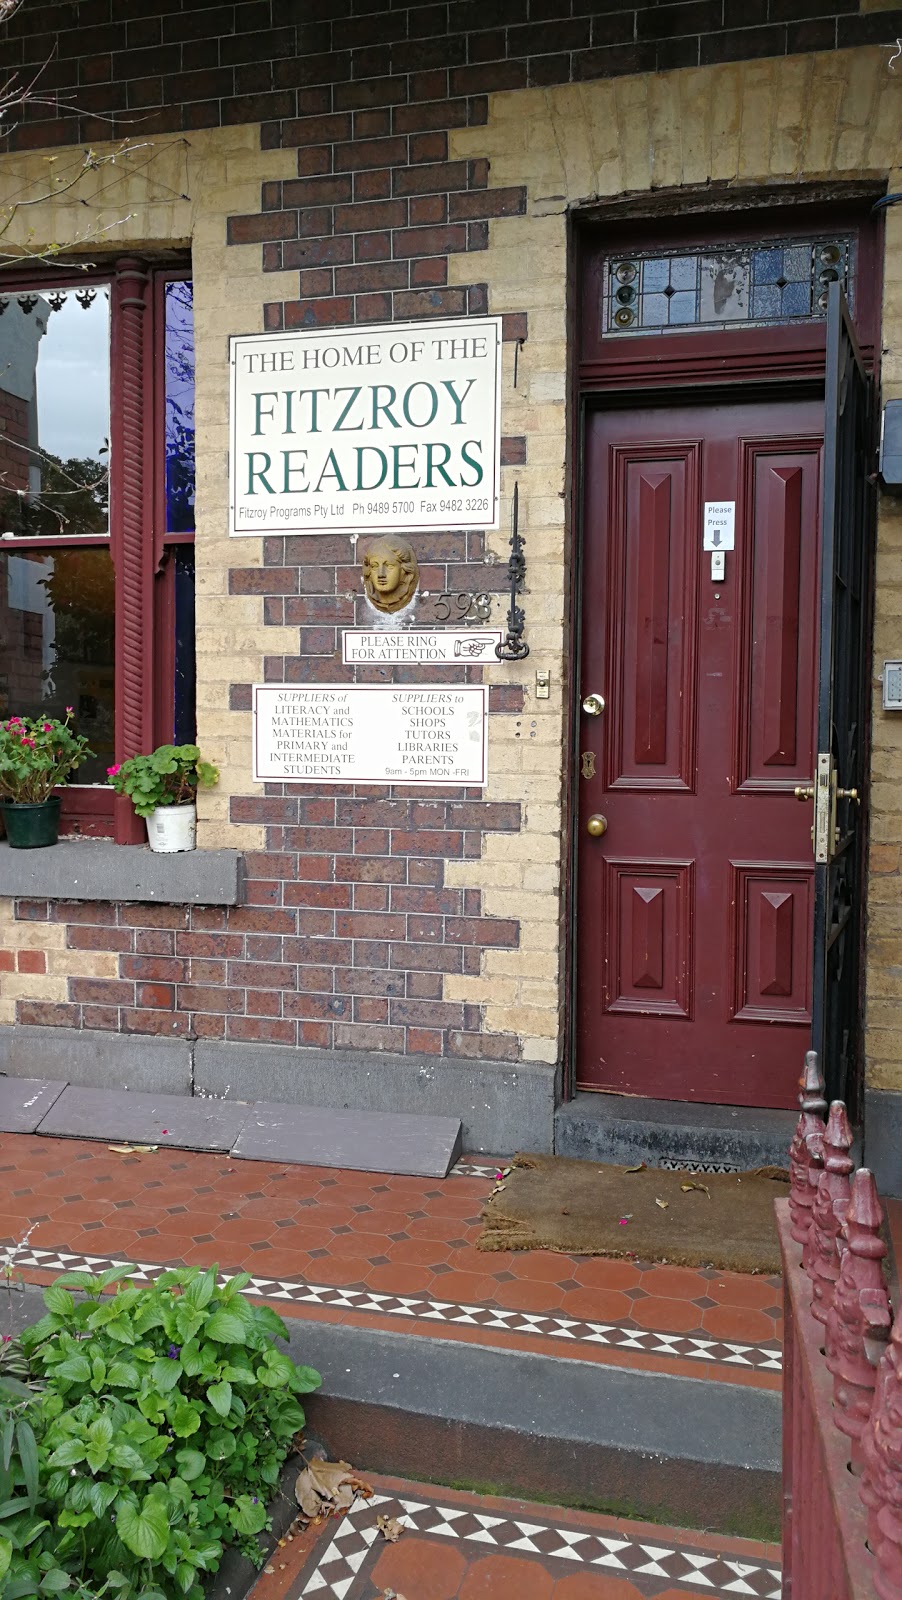 Fitzroy Programs Pty Ltd | book store | 593 Brunswick St, Fitzroy North VIC 3068, Australia | 0394895700 OR +61 3 9489 5700